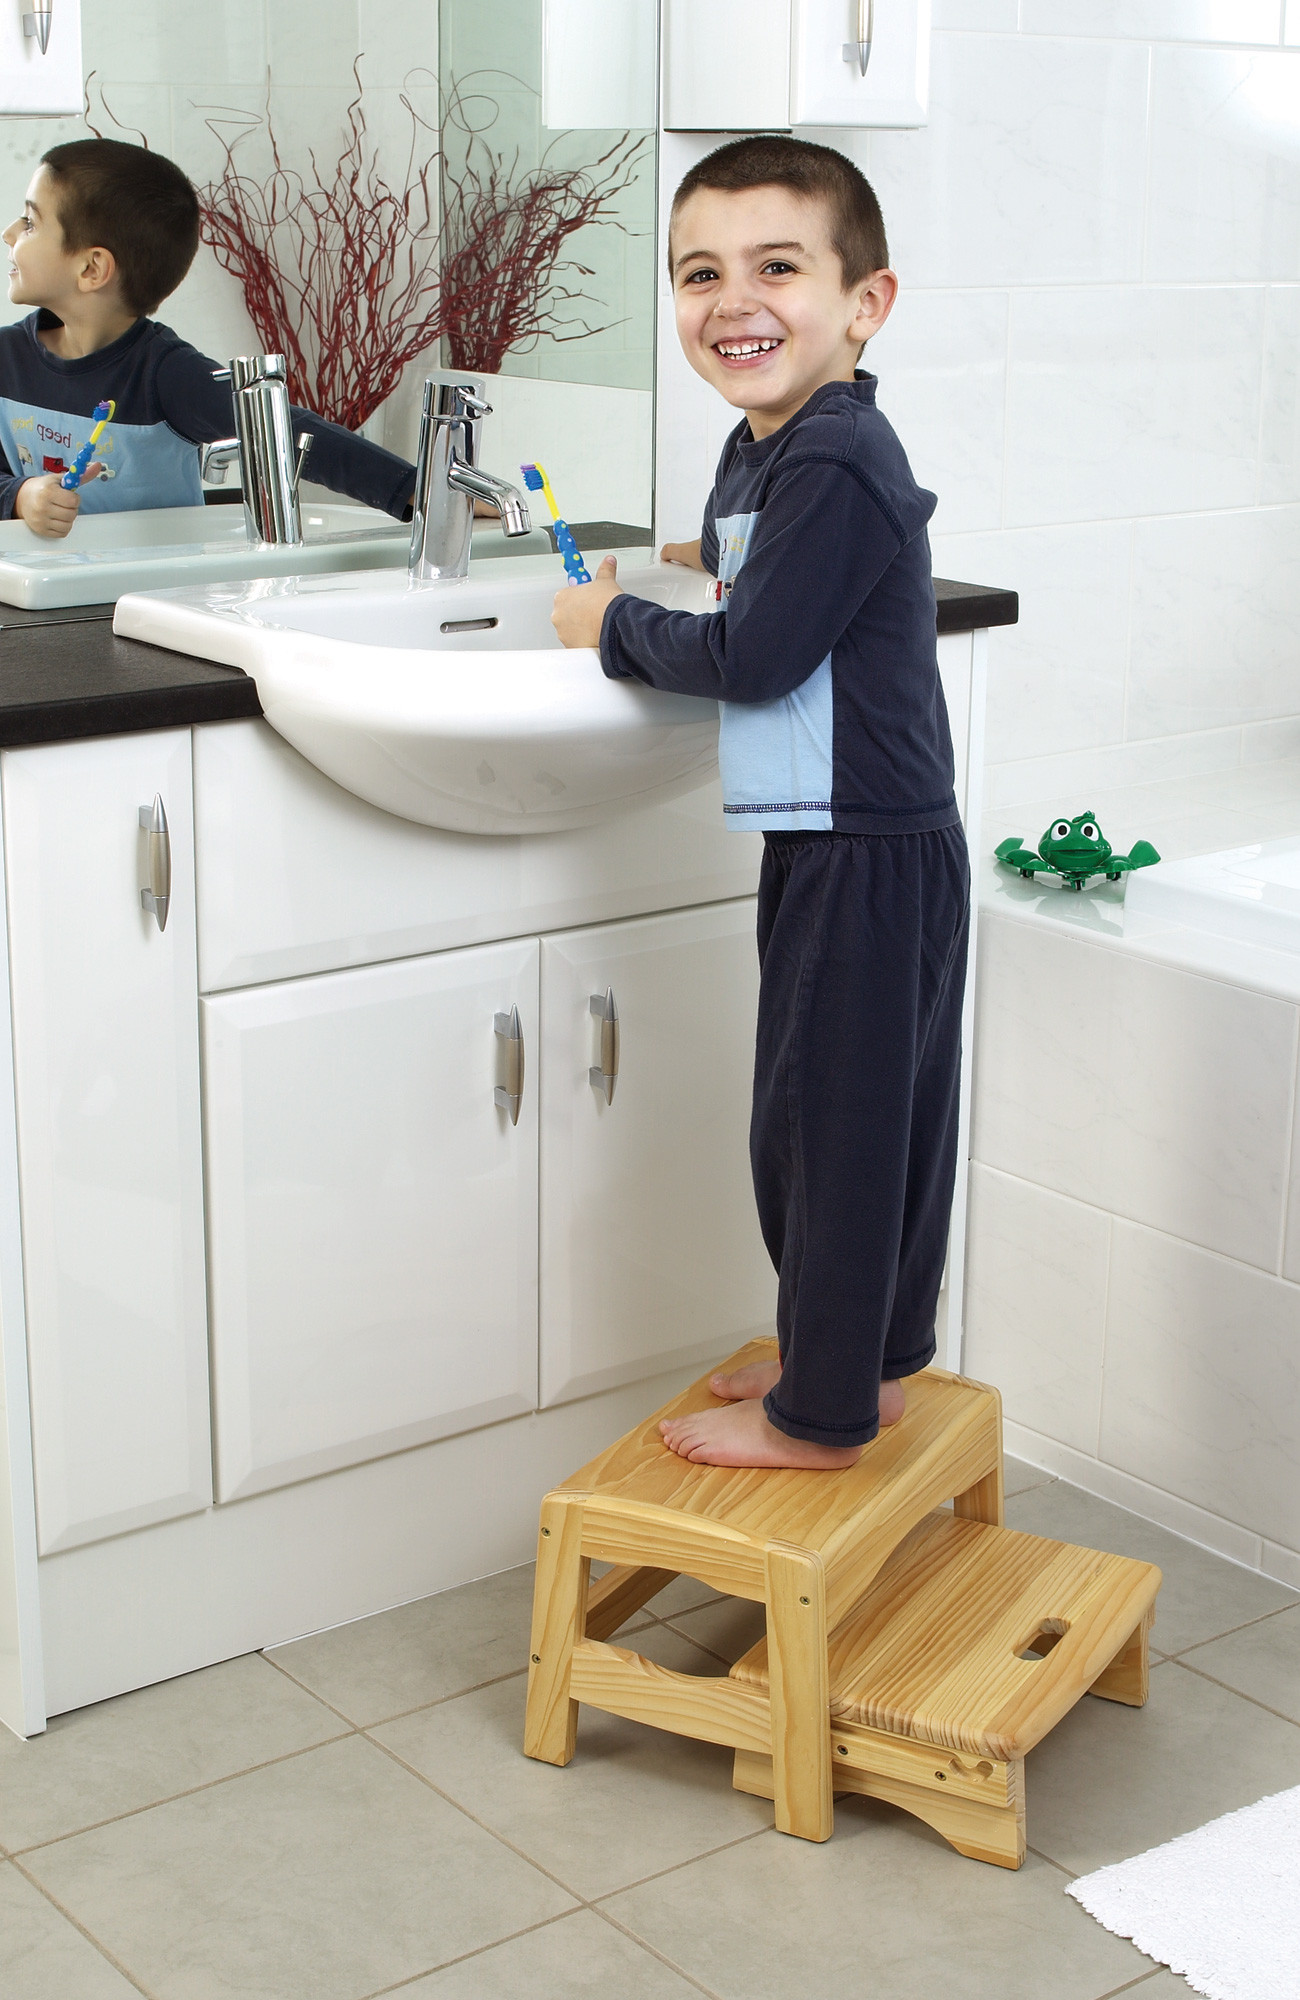 Kids Bathroom Step Stool
 Safety 1st WOODEN STEP STOOL Baby Child Bathroom Potty